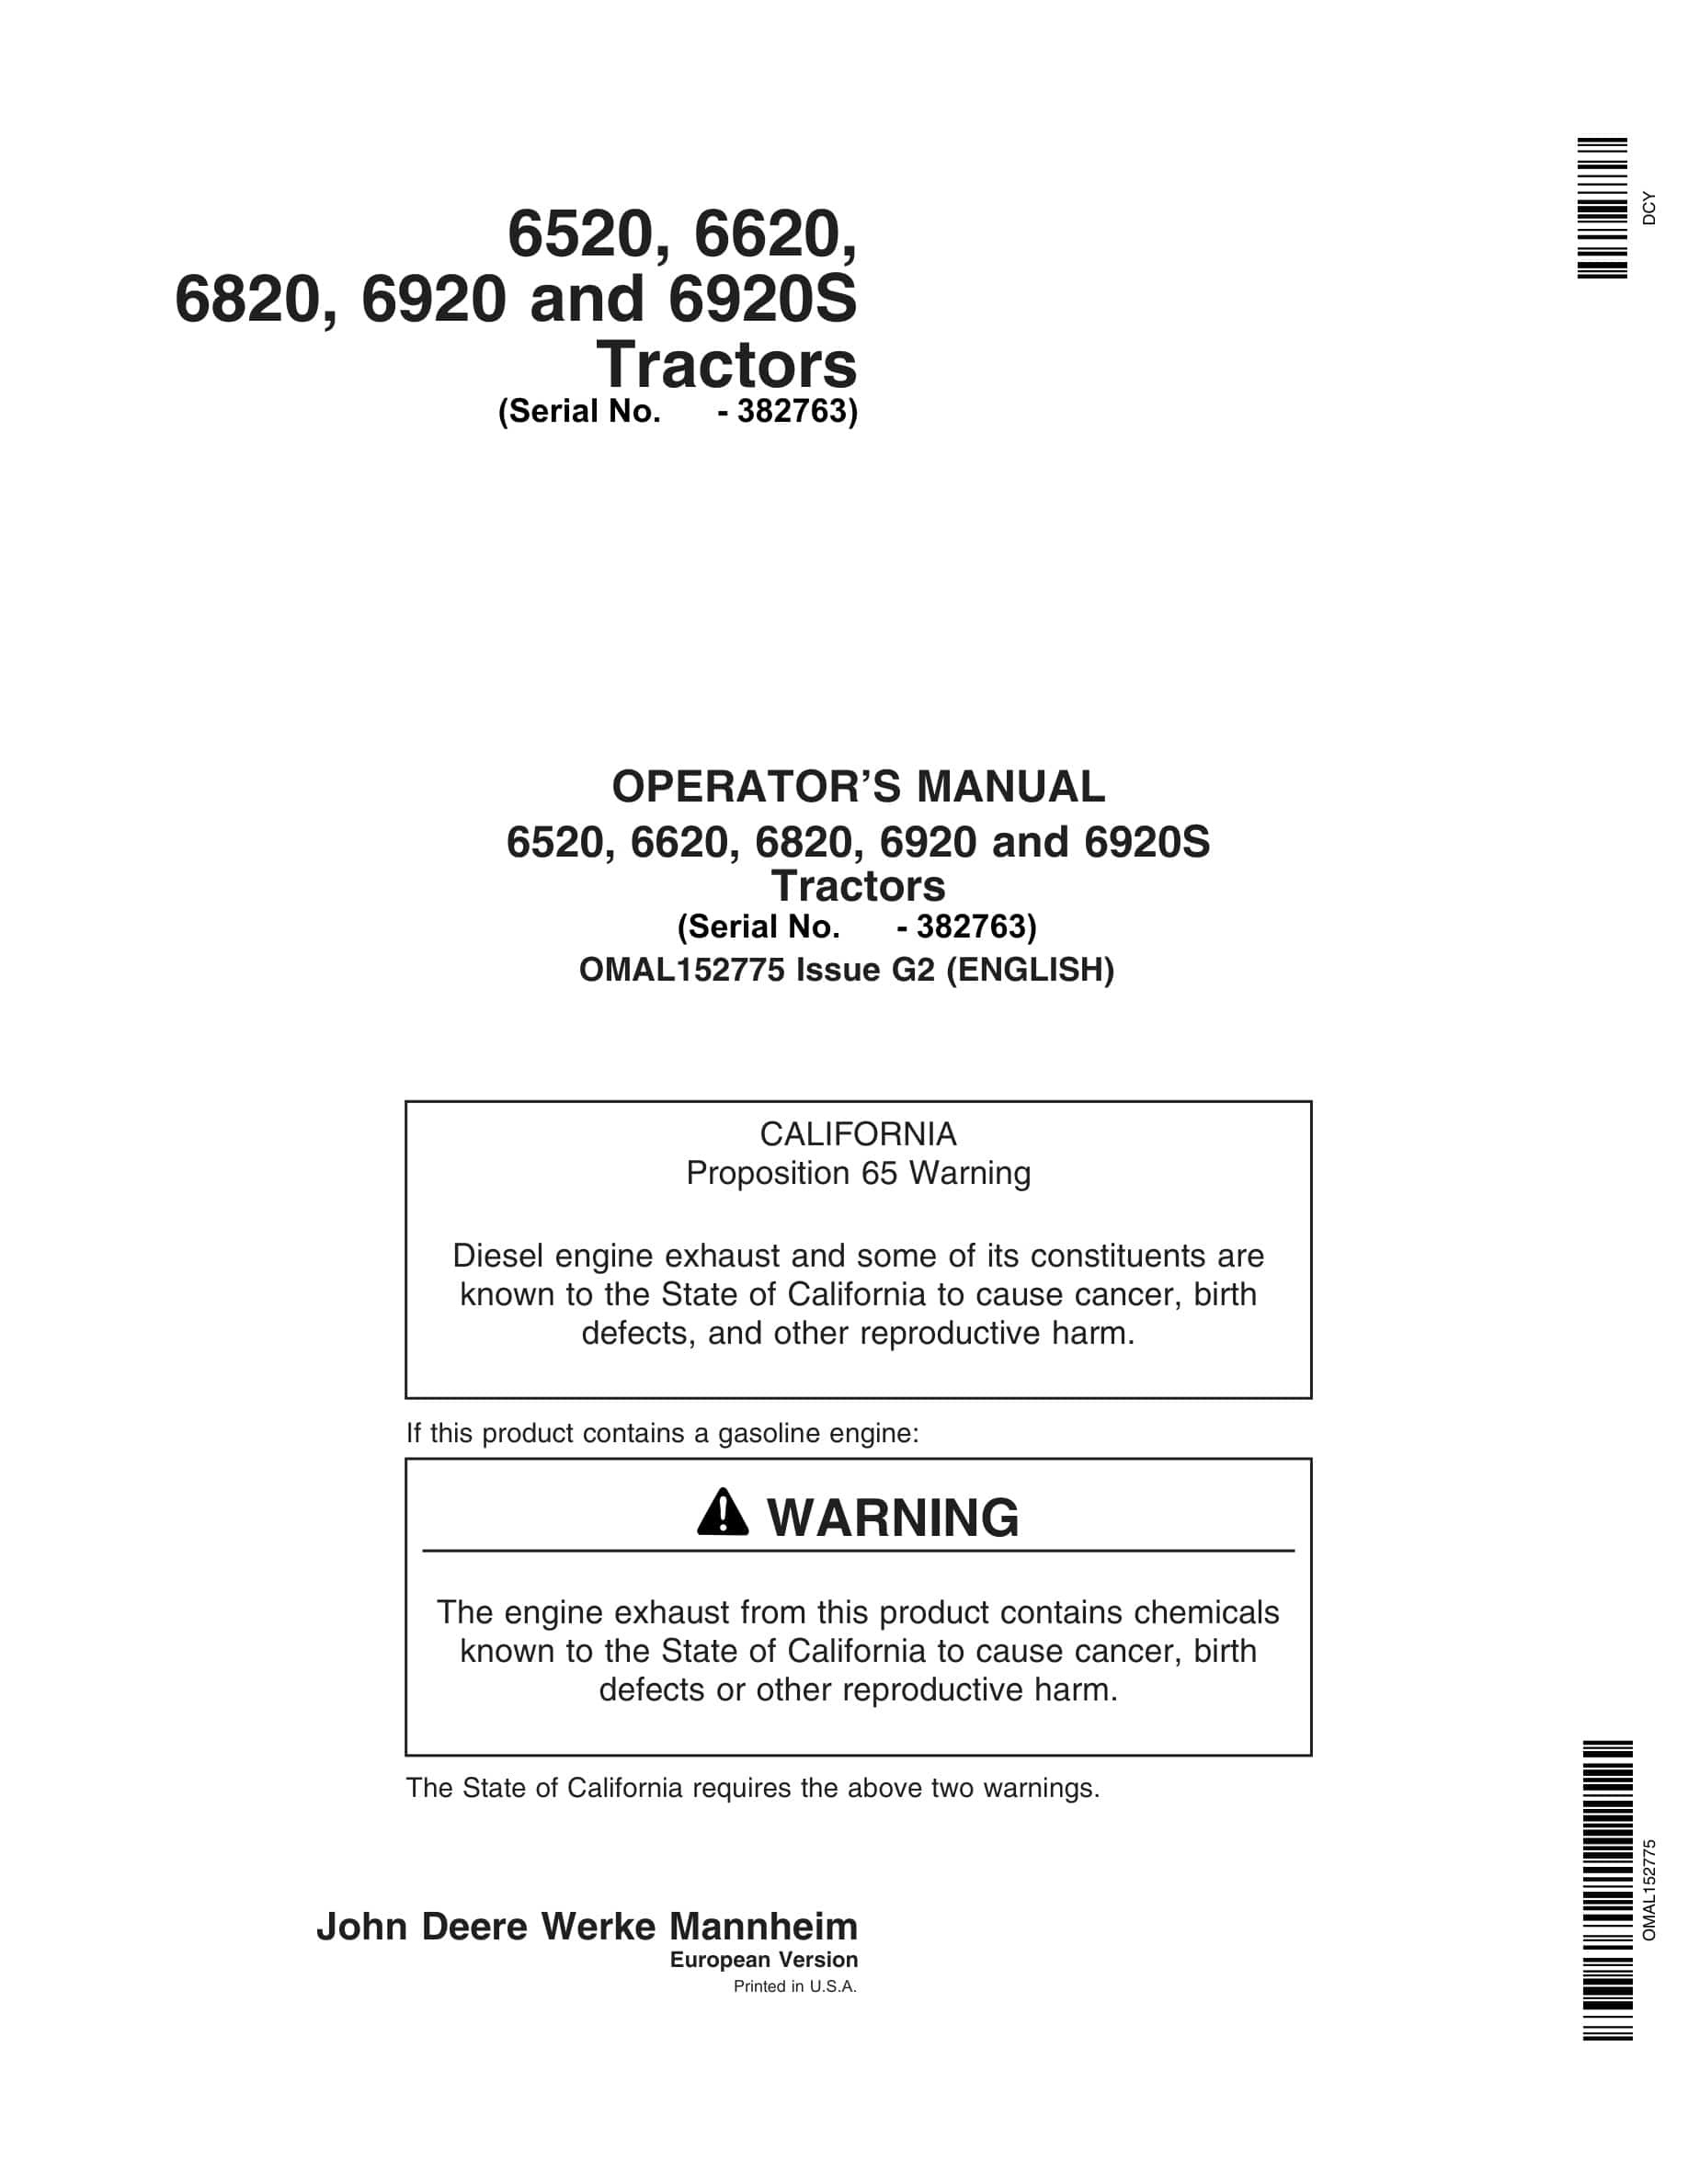 John Deere 6520, 6620, 6820, 6920 And 6920s Tractors Operator Manuals OMAL152775-1